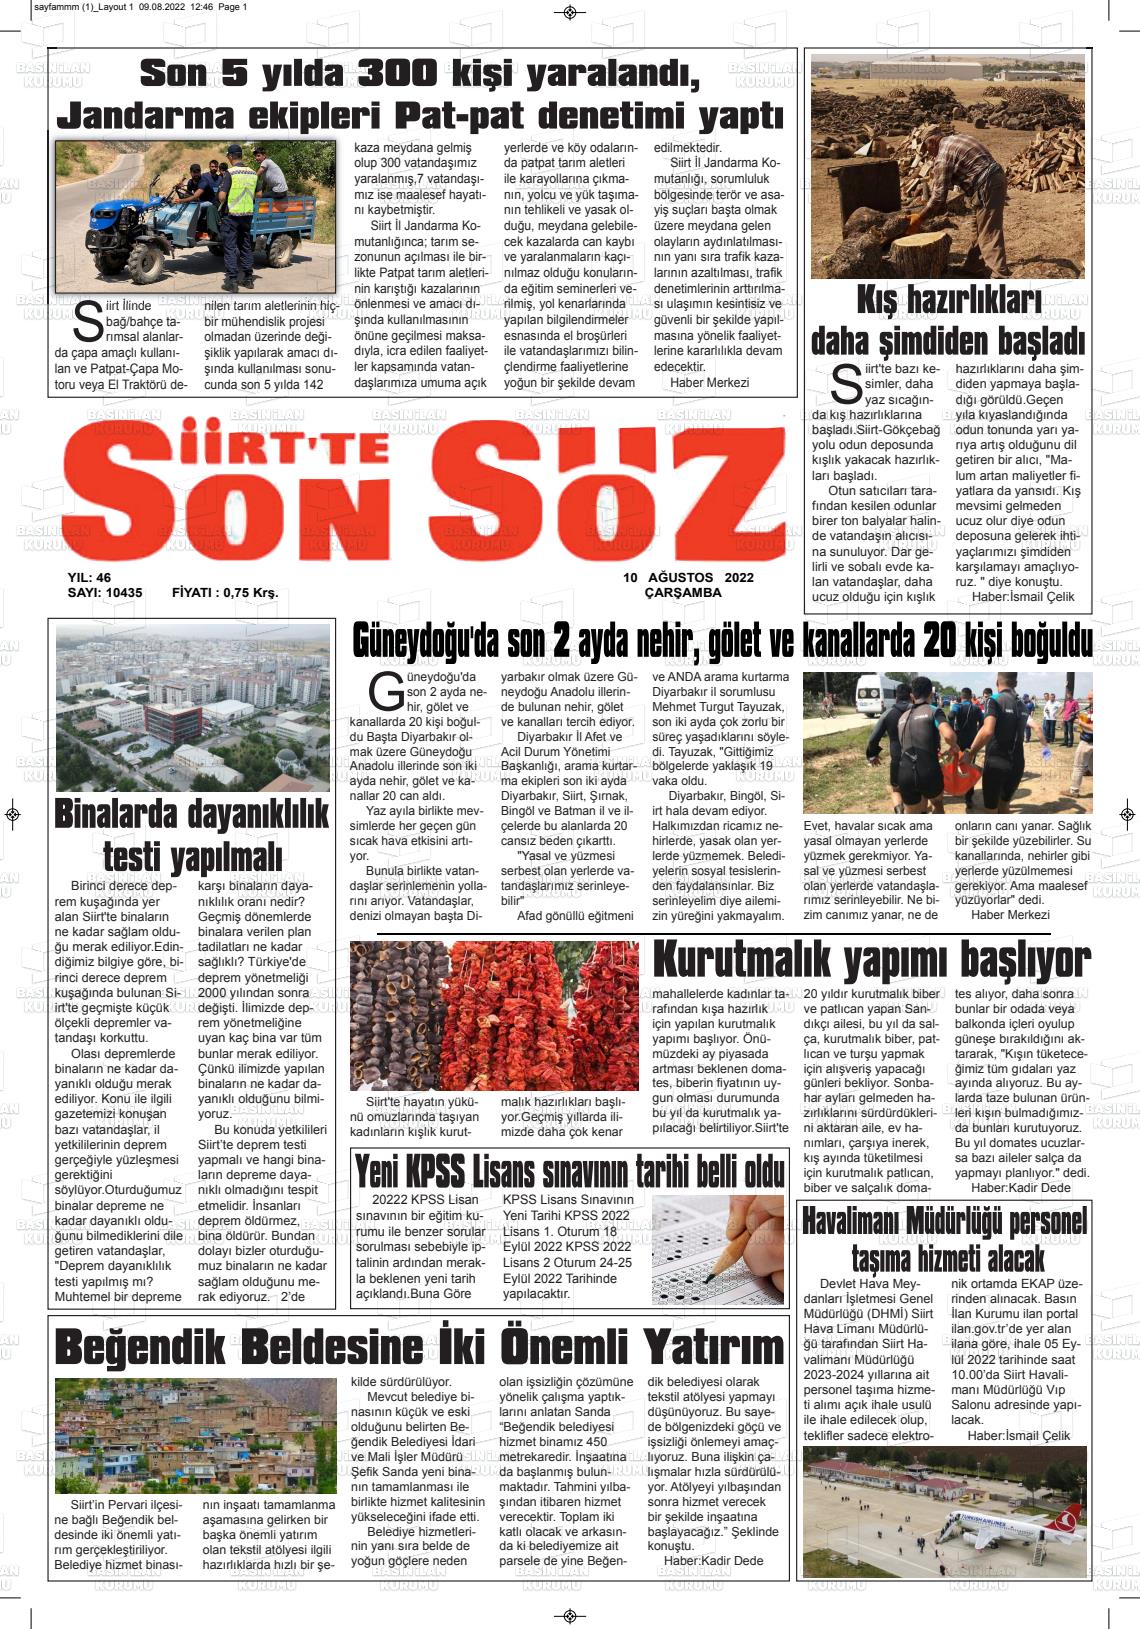 10 Ağustos 2022 Siirt'te Sonsöz Gazete Manşeti